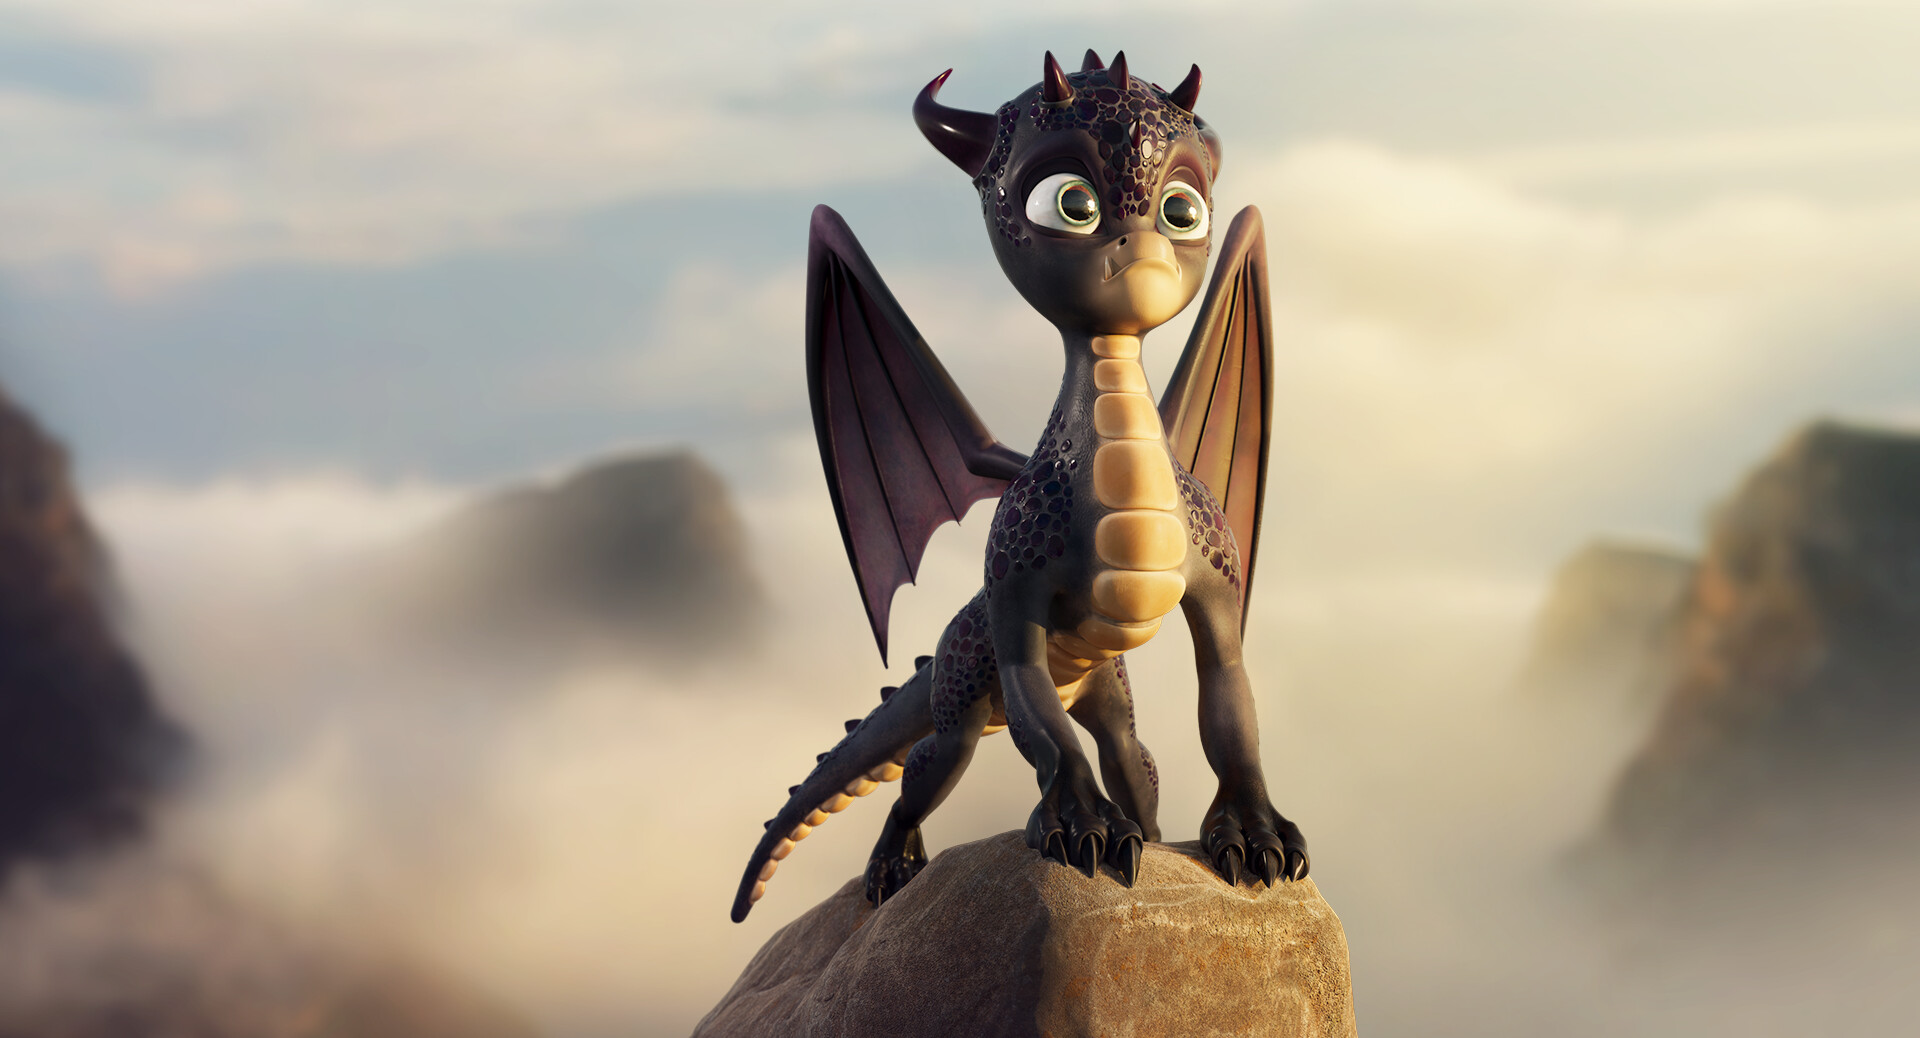  Cartoon image of a young dragon created in Maya.